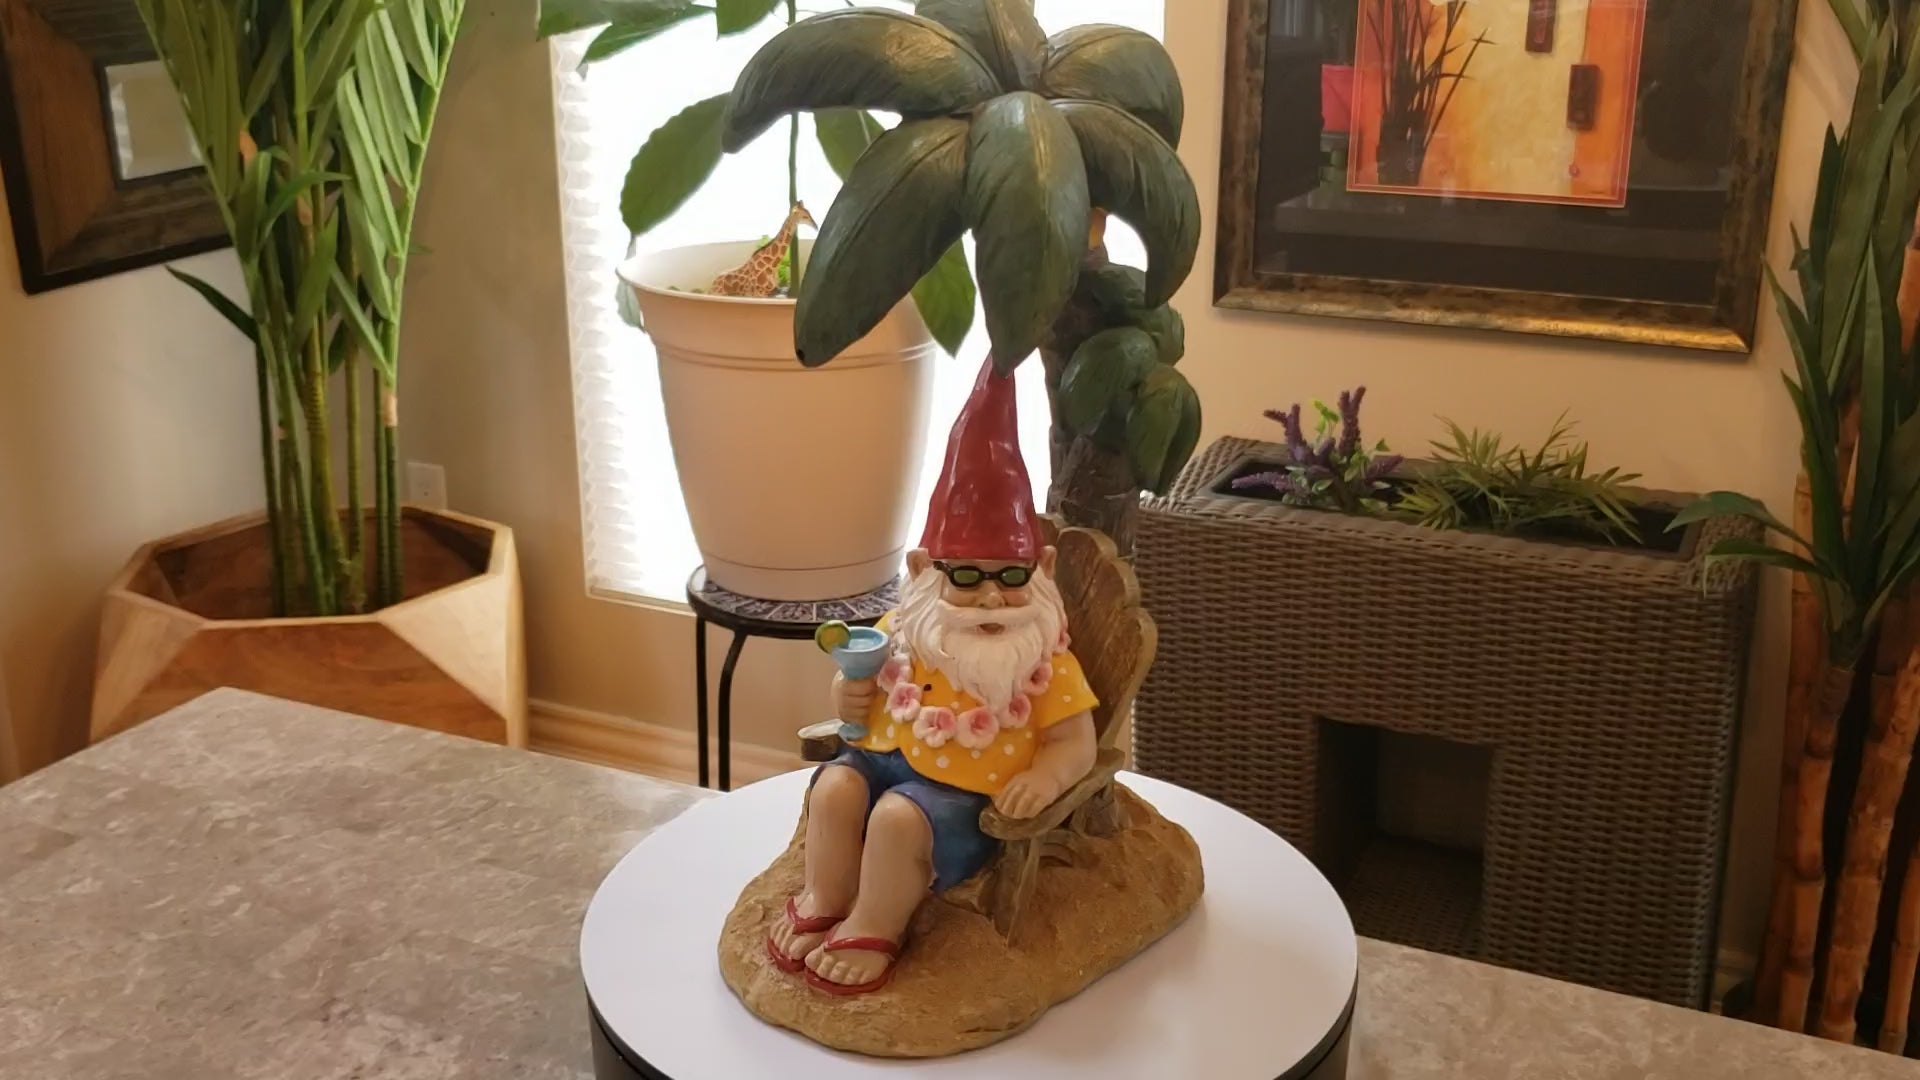 Auction for sale beach gnome statue